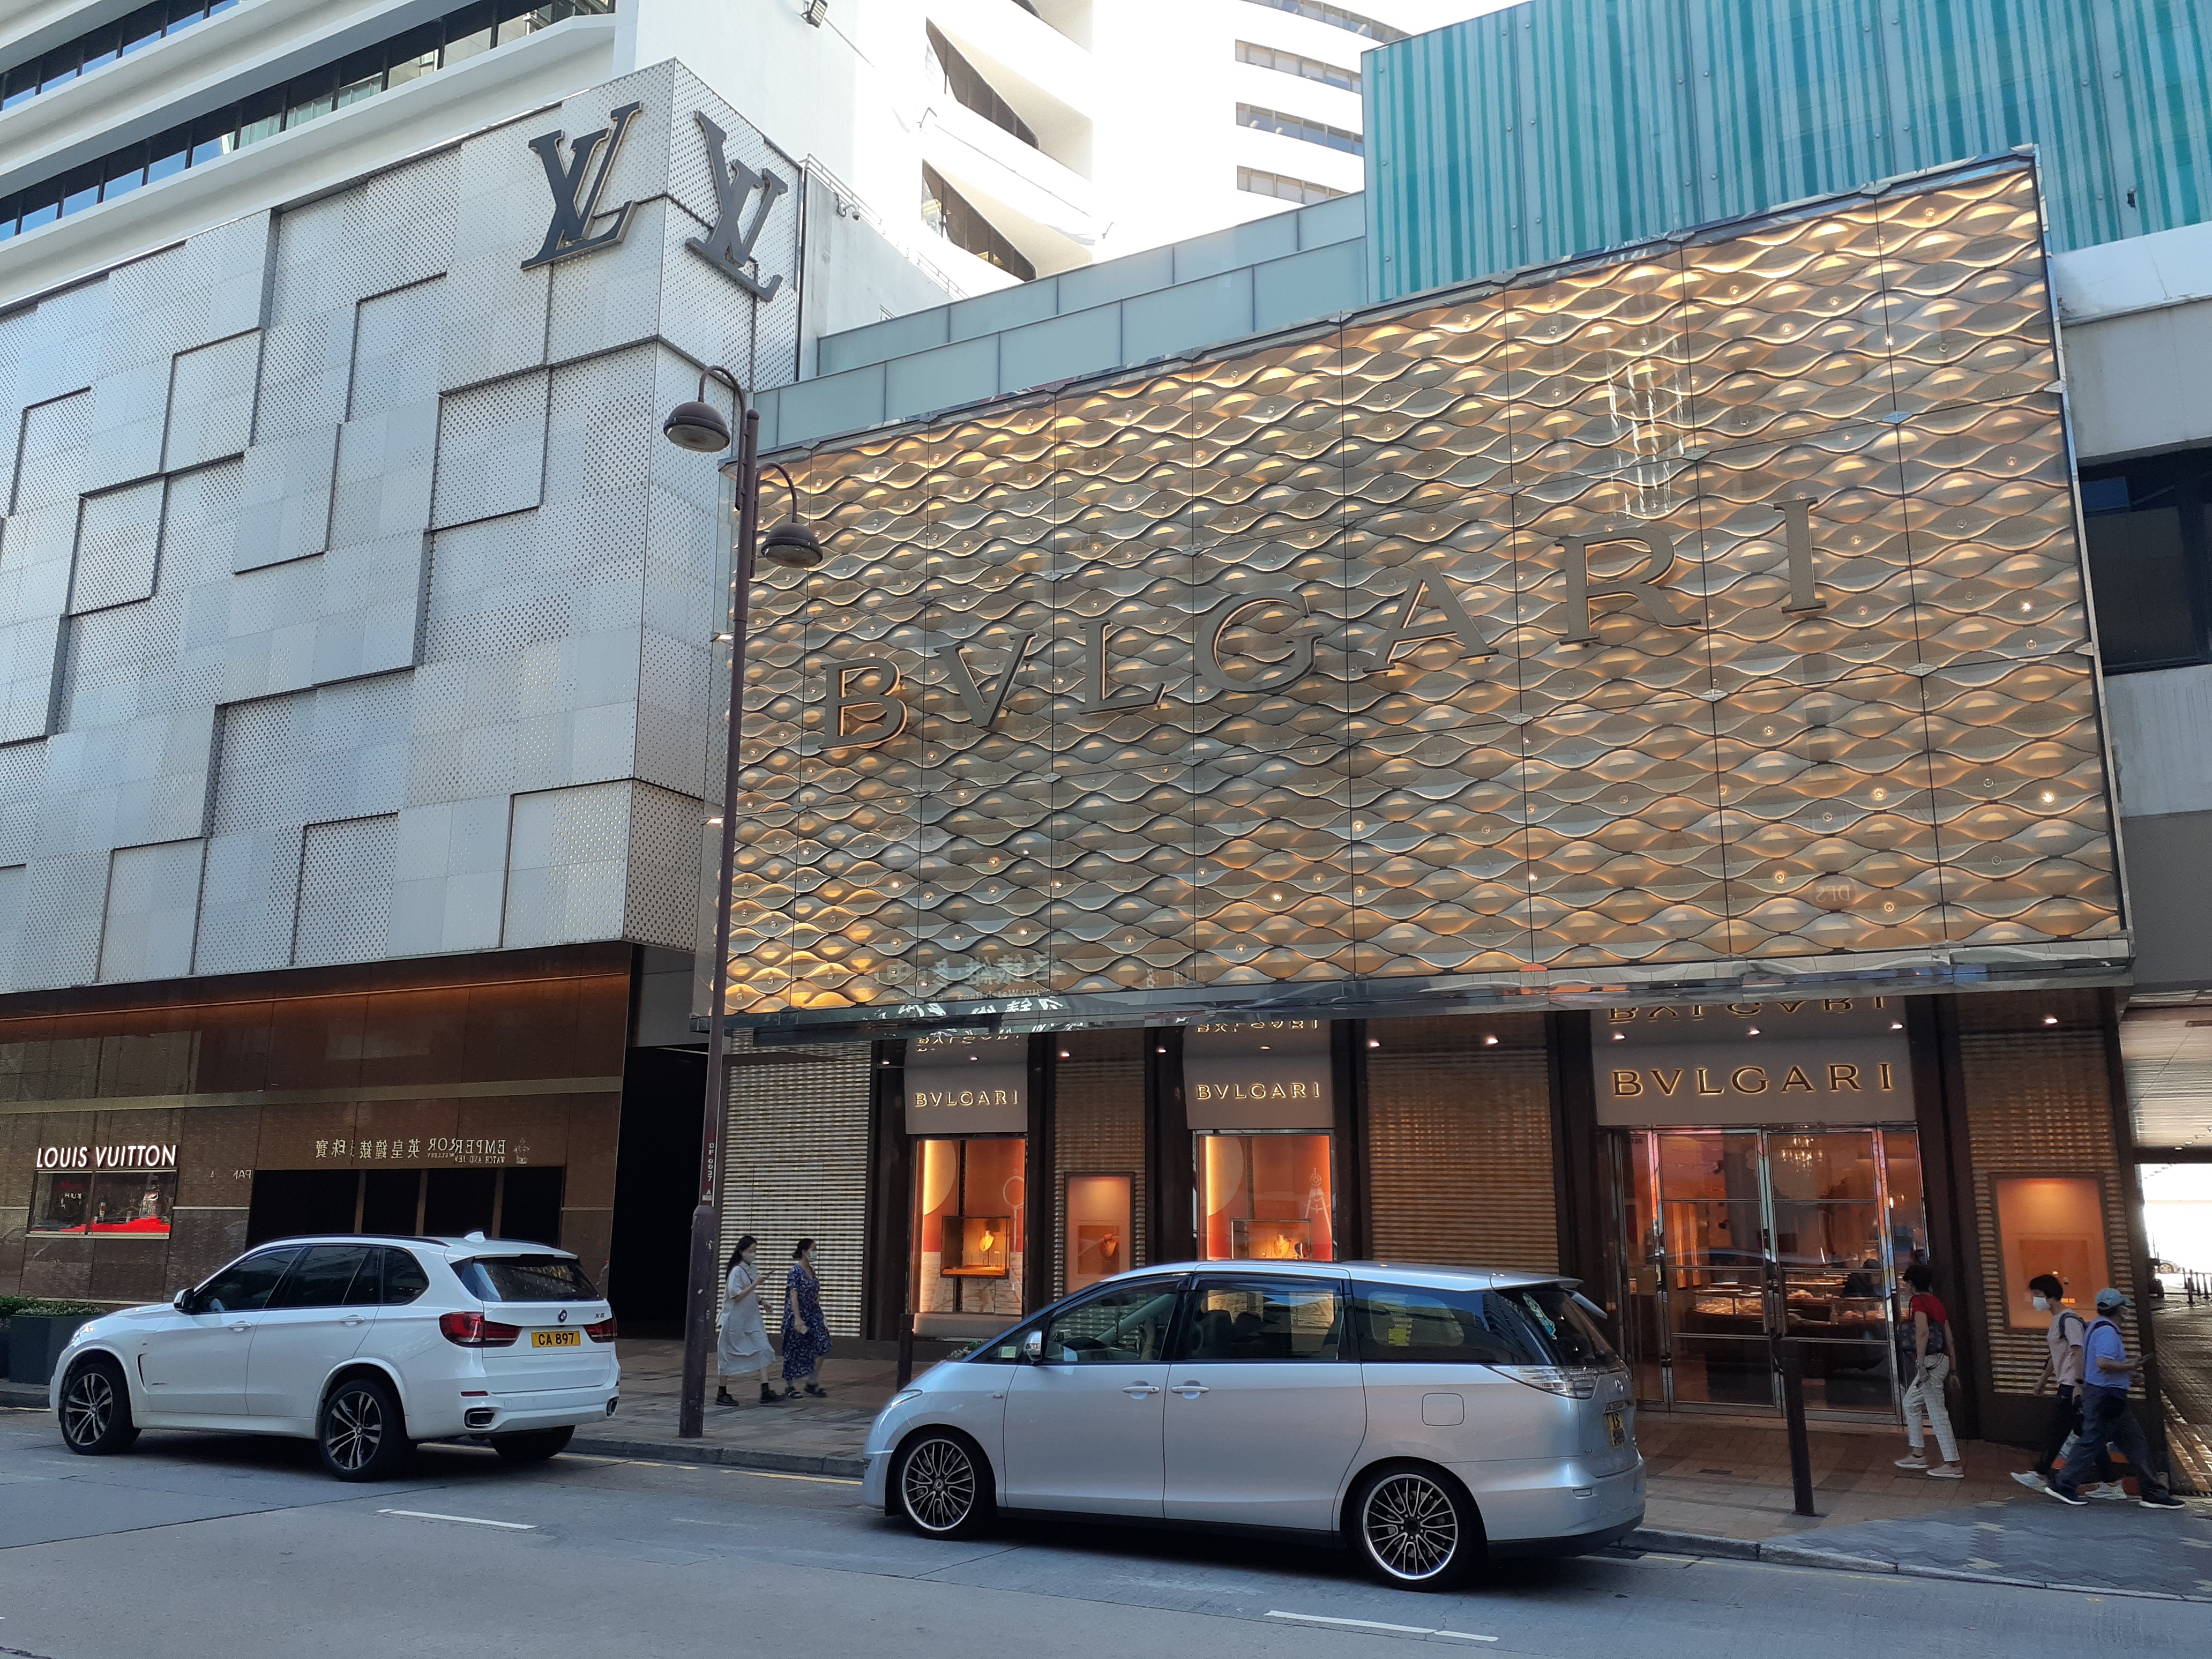 Love My Bags - Louis Vuitton Canton Road Tsim Sha Tsui in Hong Kong for  #storefrontsaturdays #teamLMBtravels . . . . . . #travel #louisvuitton  #louisvuittonstorefront #designer #storefront #bag #asia #hongkong #hk  #tsimshatsui #TST